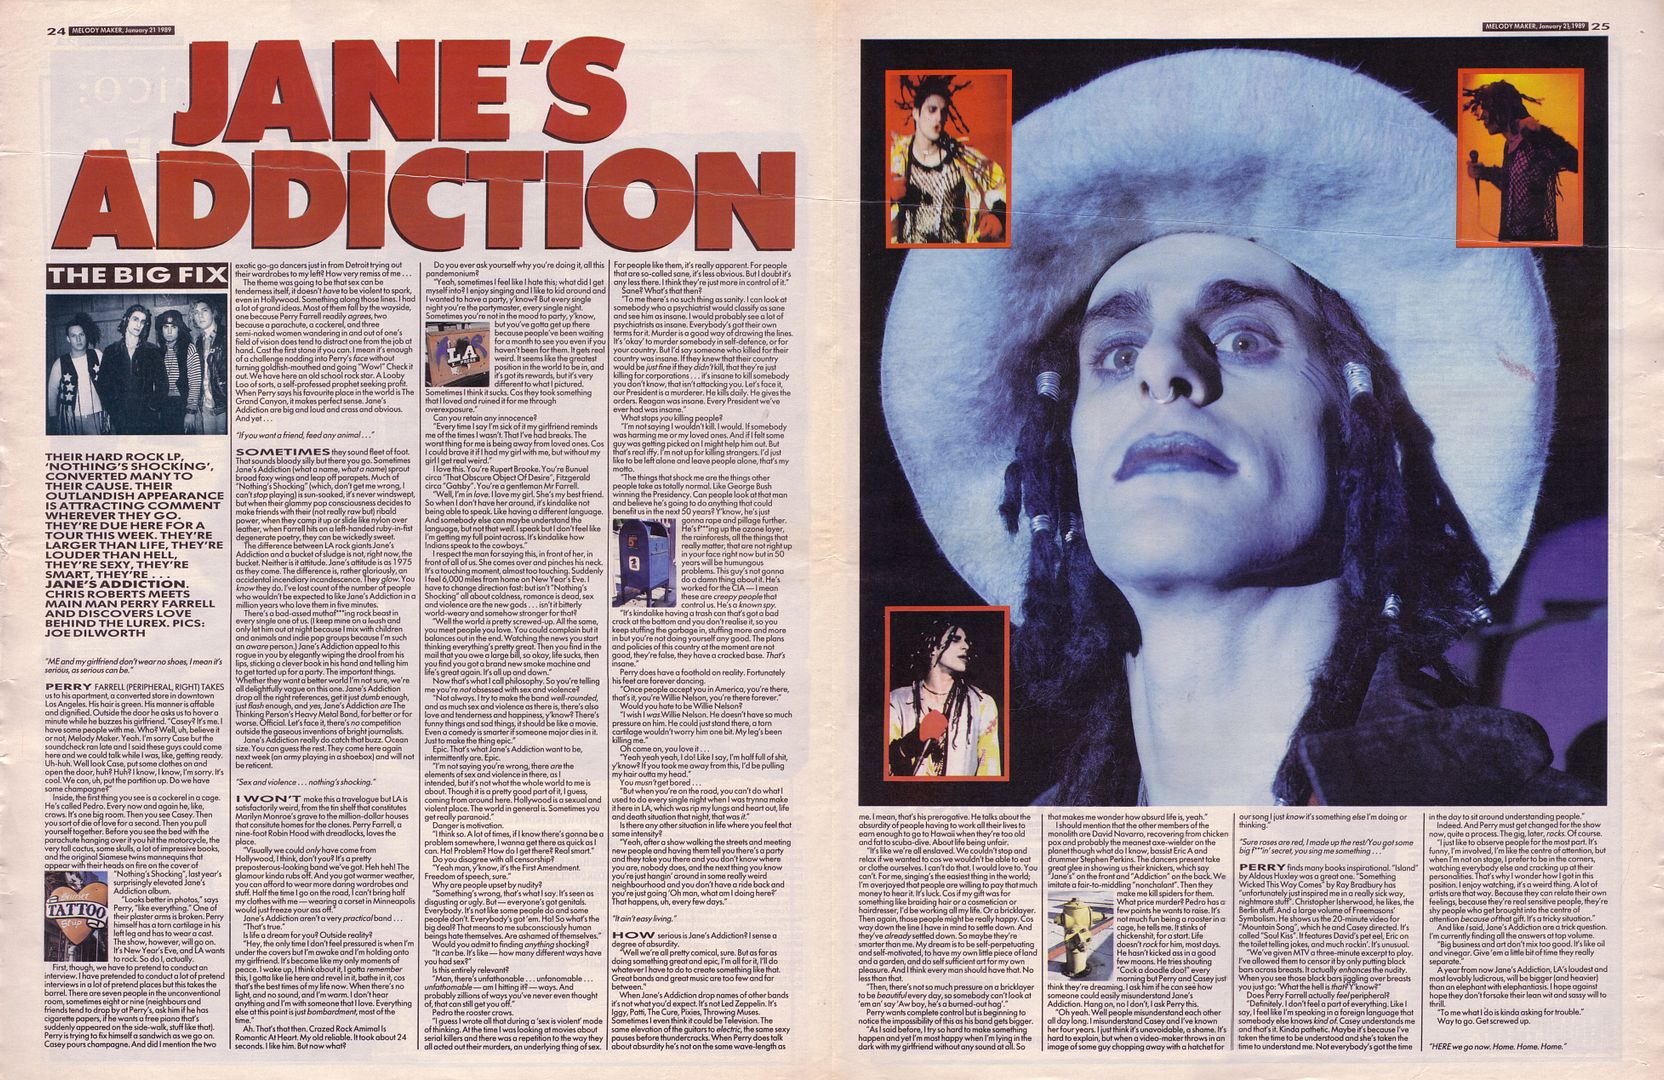 chris-roberts-interviews-janes-addiction-21st-january-19892_zpsce9165f1.jpg